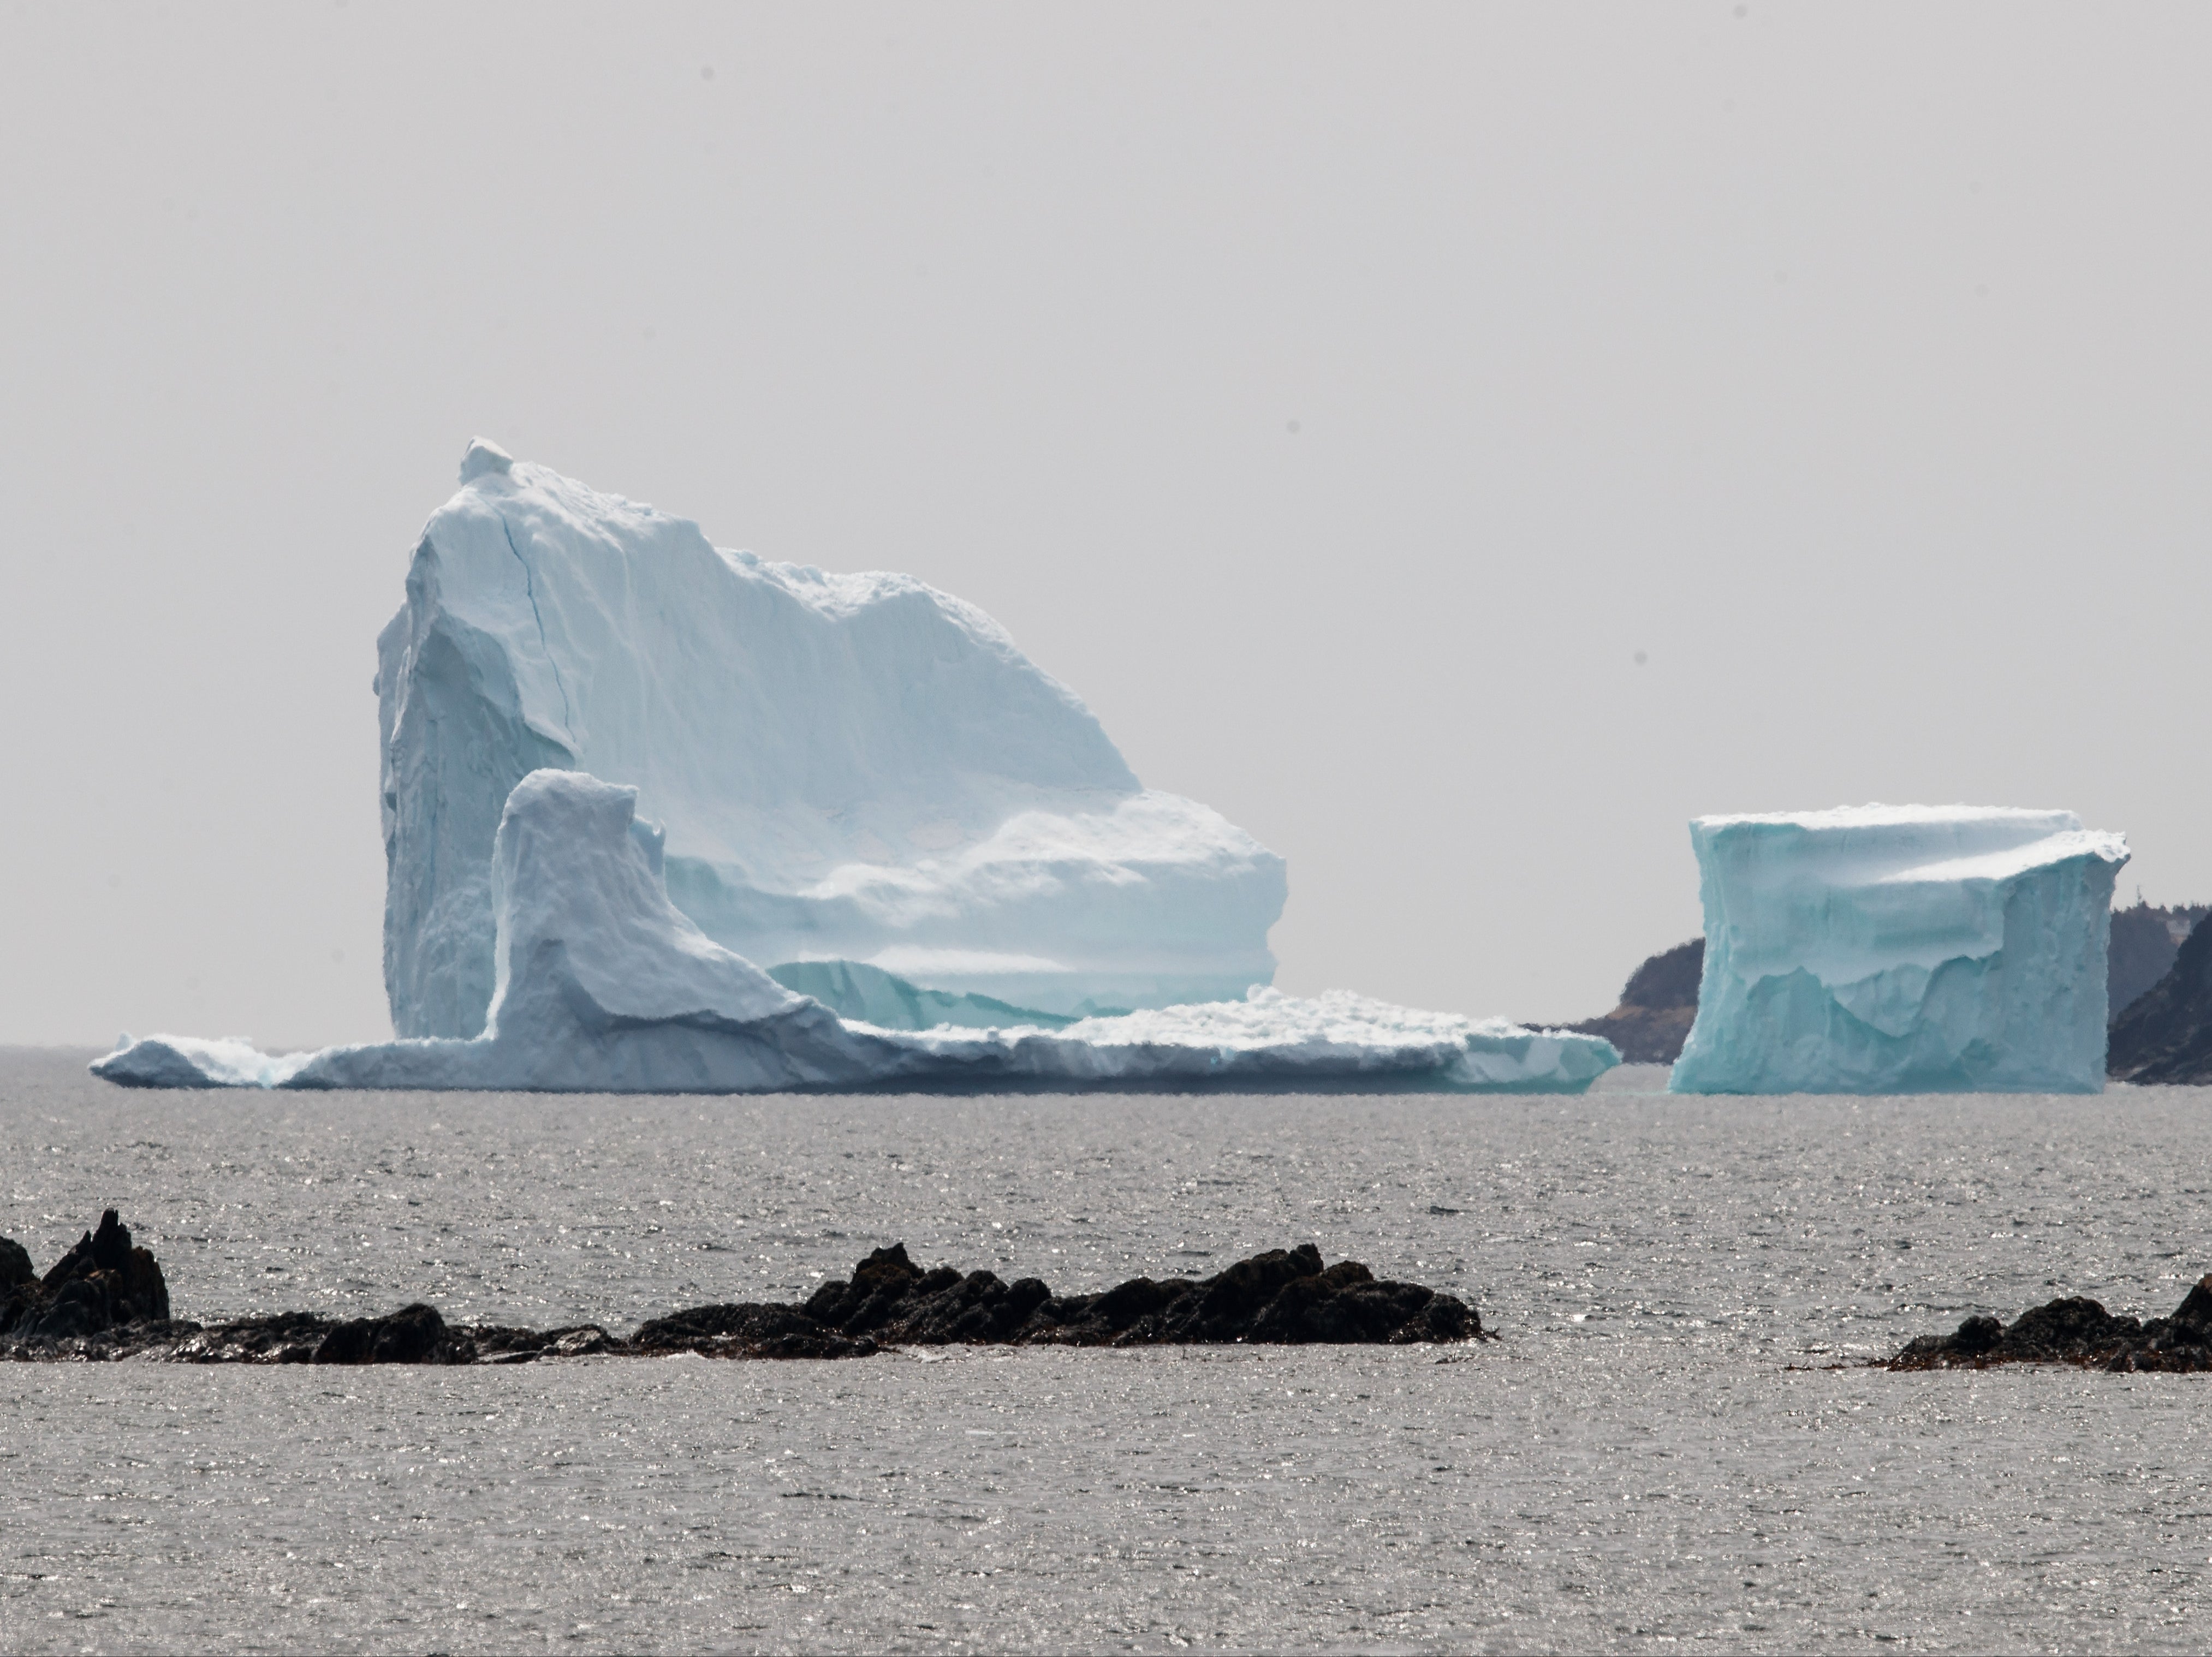 Representative image of an iceberg in Newfoundland